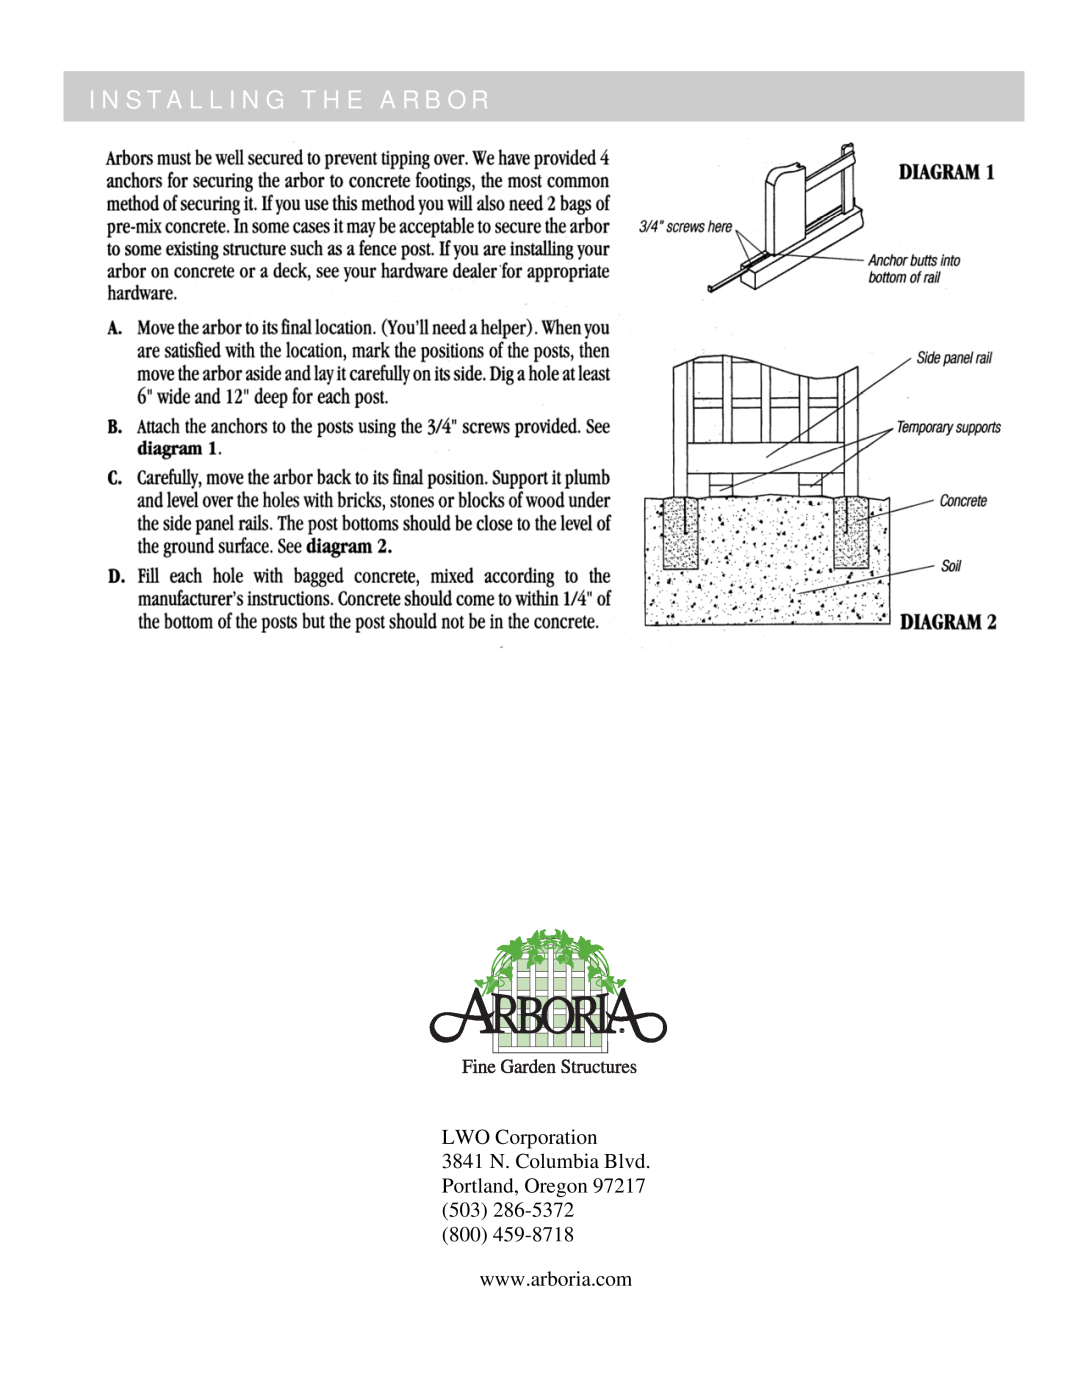 Arboria Longevity manual Installing The Arbor, LWO Corporation 3841 N. Columbia Blvd, Portland, Oregon 503286-5372 